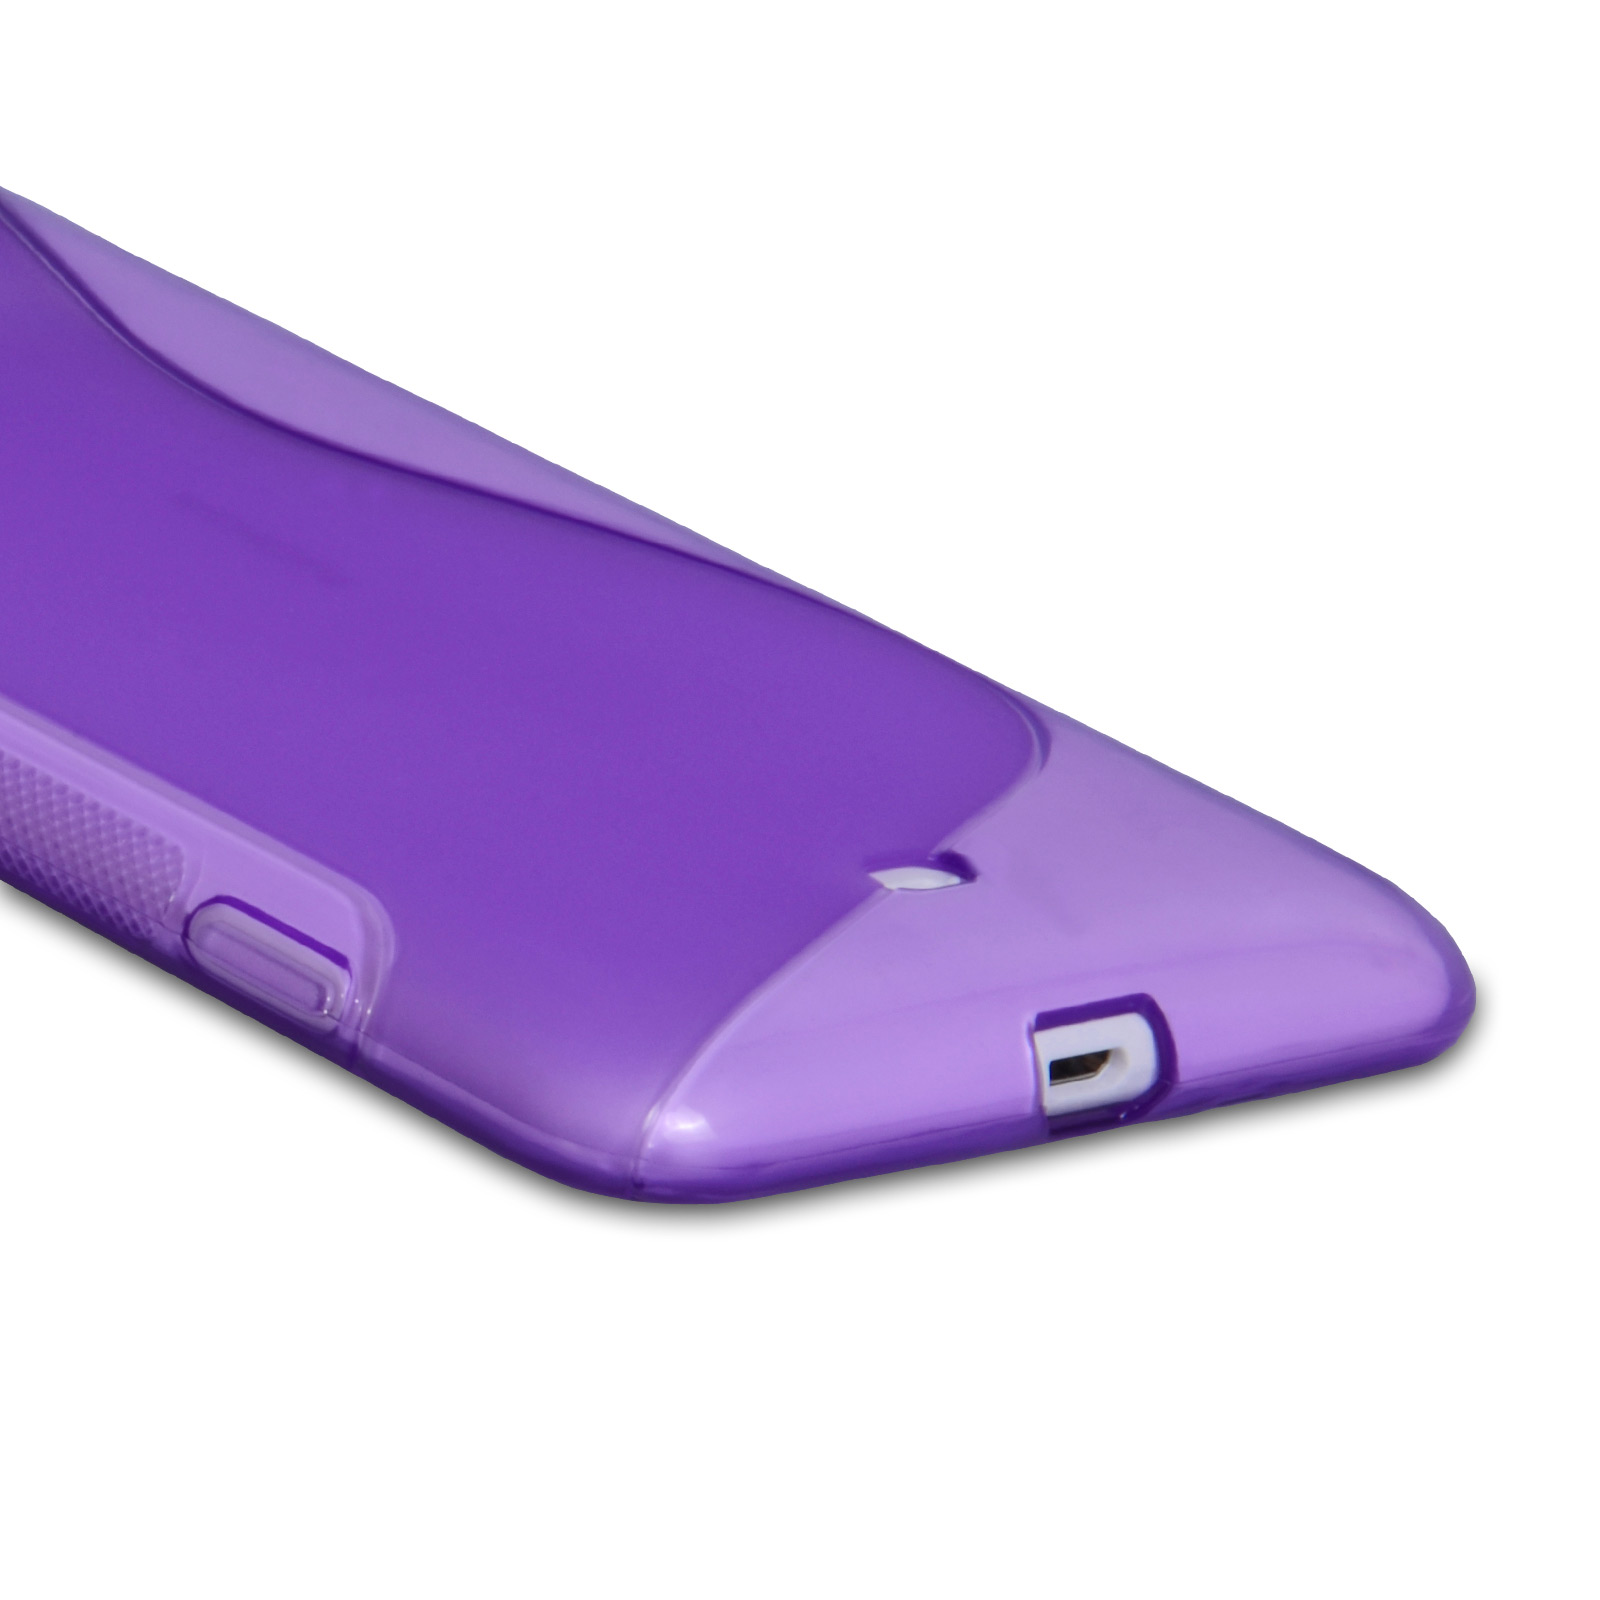 Caseflex Nokia Lumia 1320 Silicone Gel S-Line Case - Purple